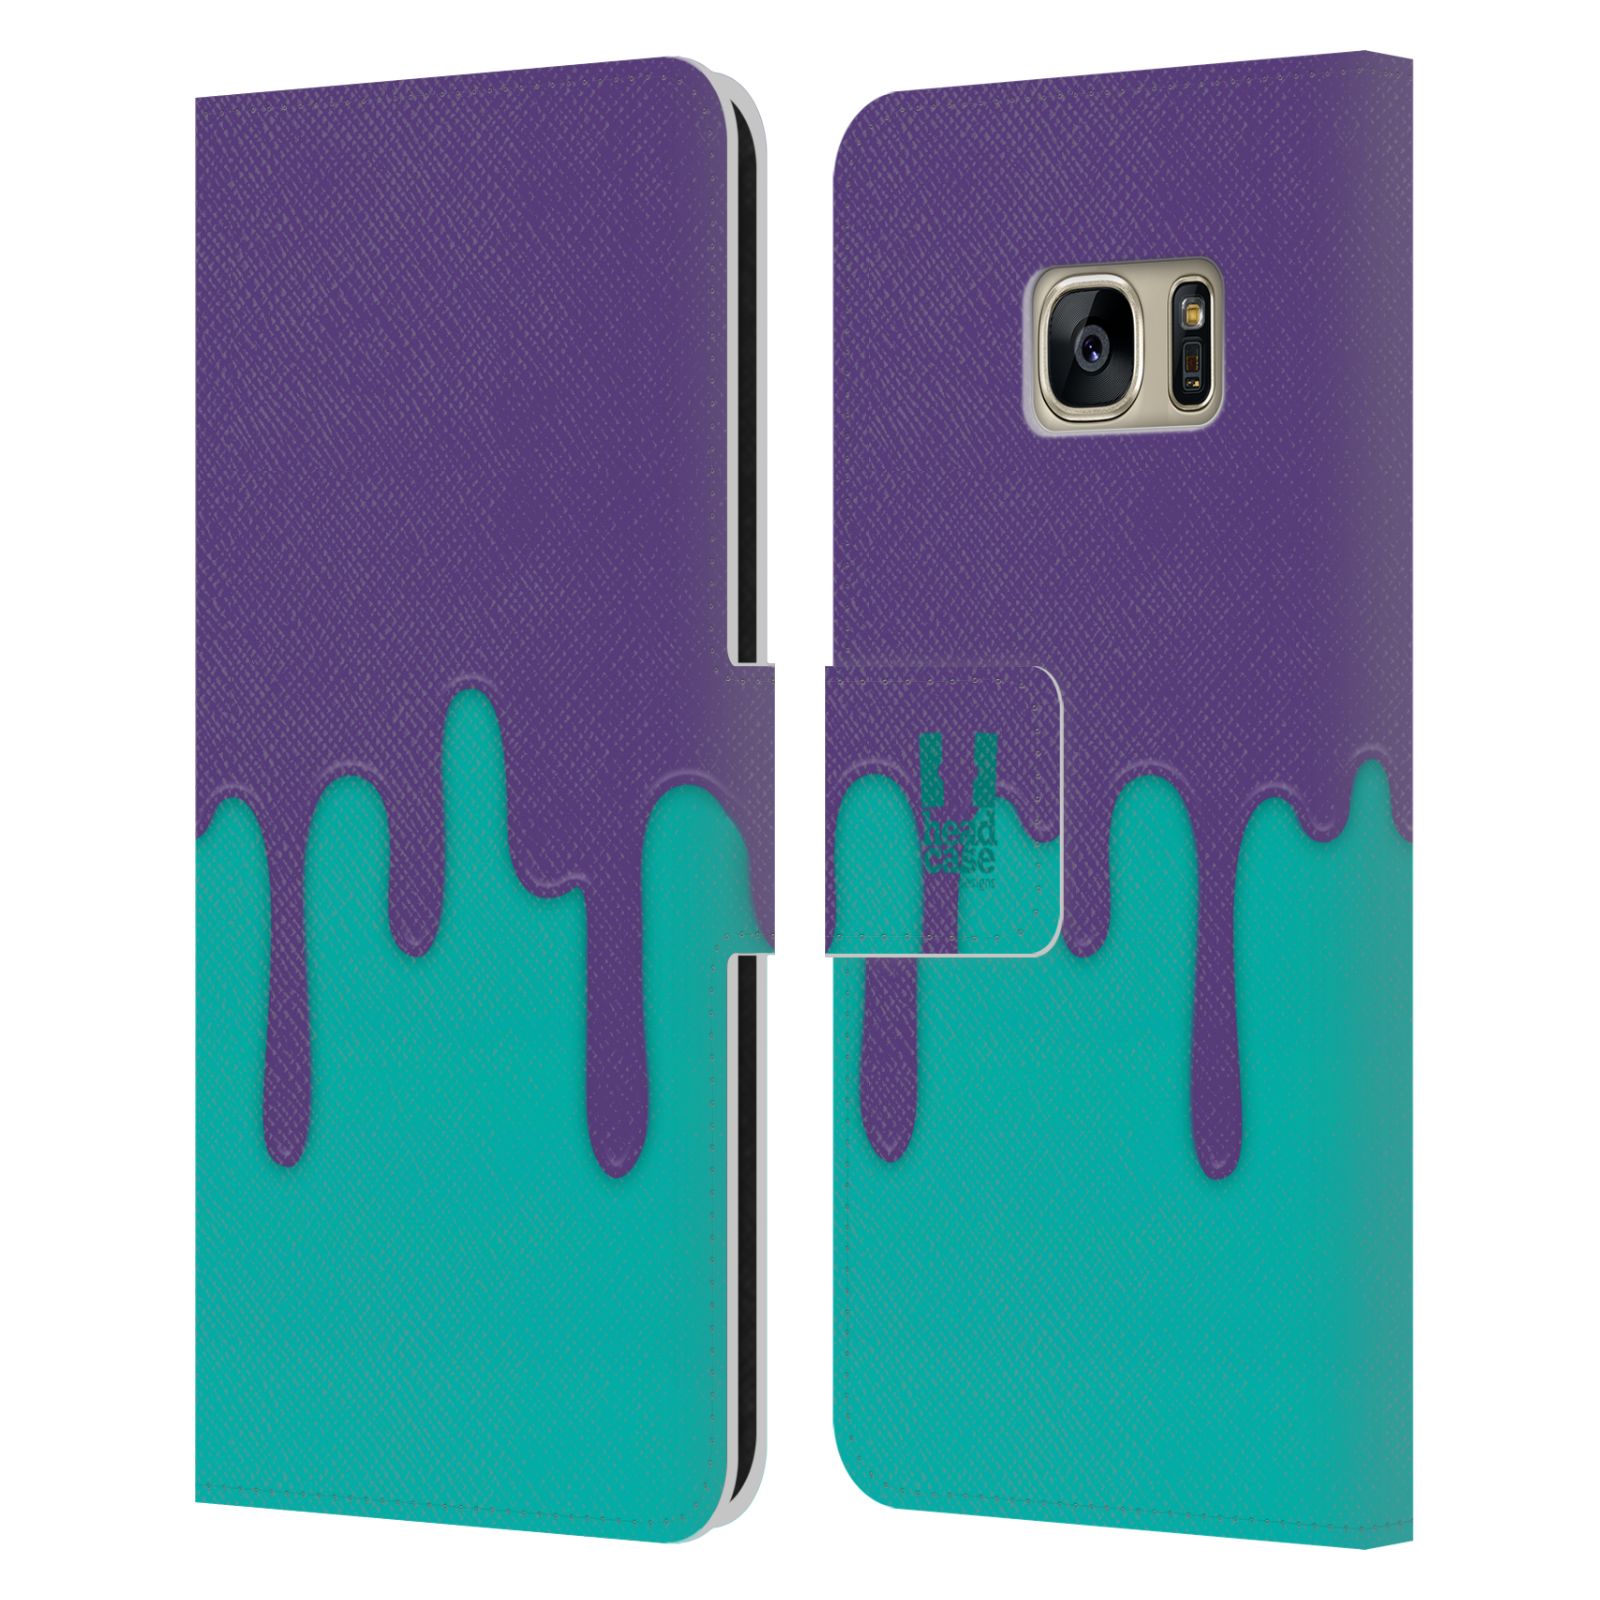 HEAD CASE Flipové pouzdro pro mobil Samsung Galaxy S7 (G9300) Rozlitá barva fialová a tyrkysová